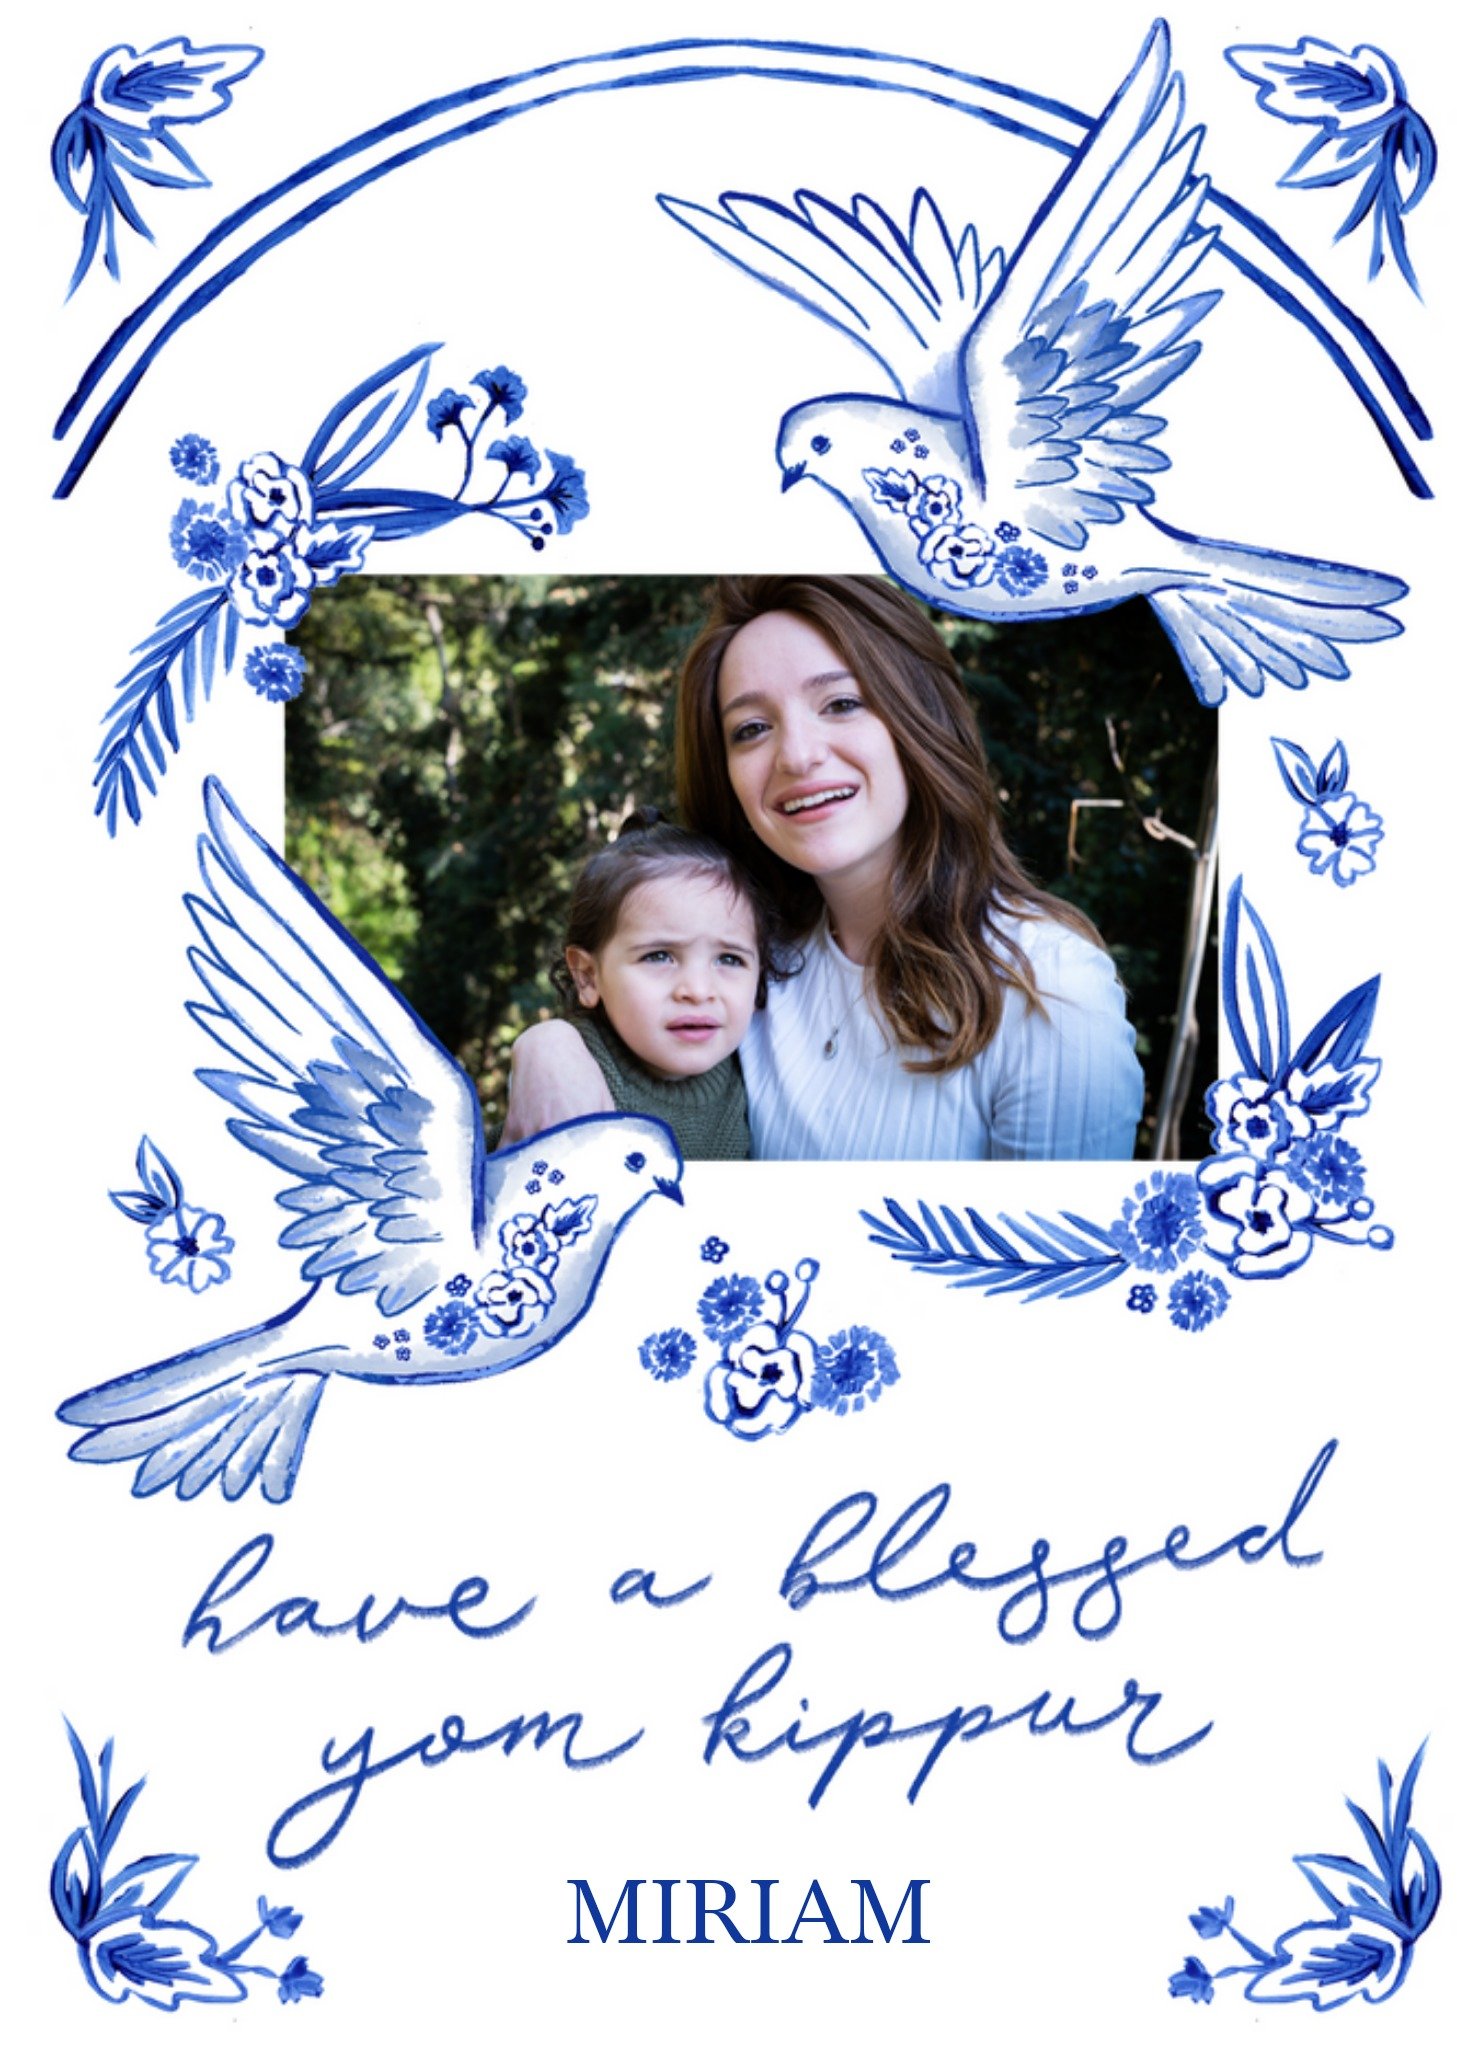 Moonpig Blue Beautiful Painted Birds And Flowers Blessed Yom Kippur Photo Upload Card, Large